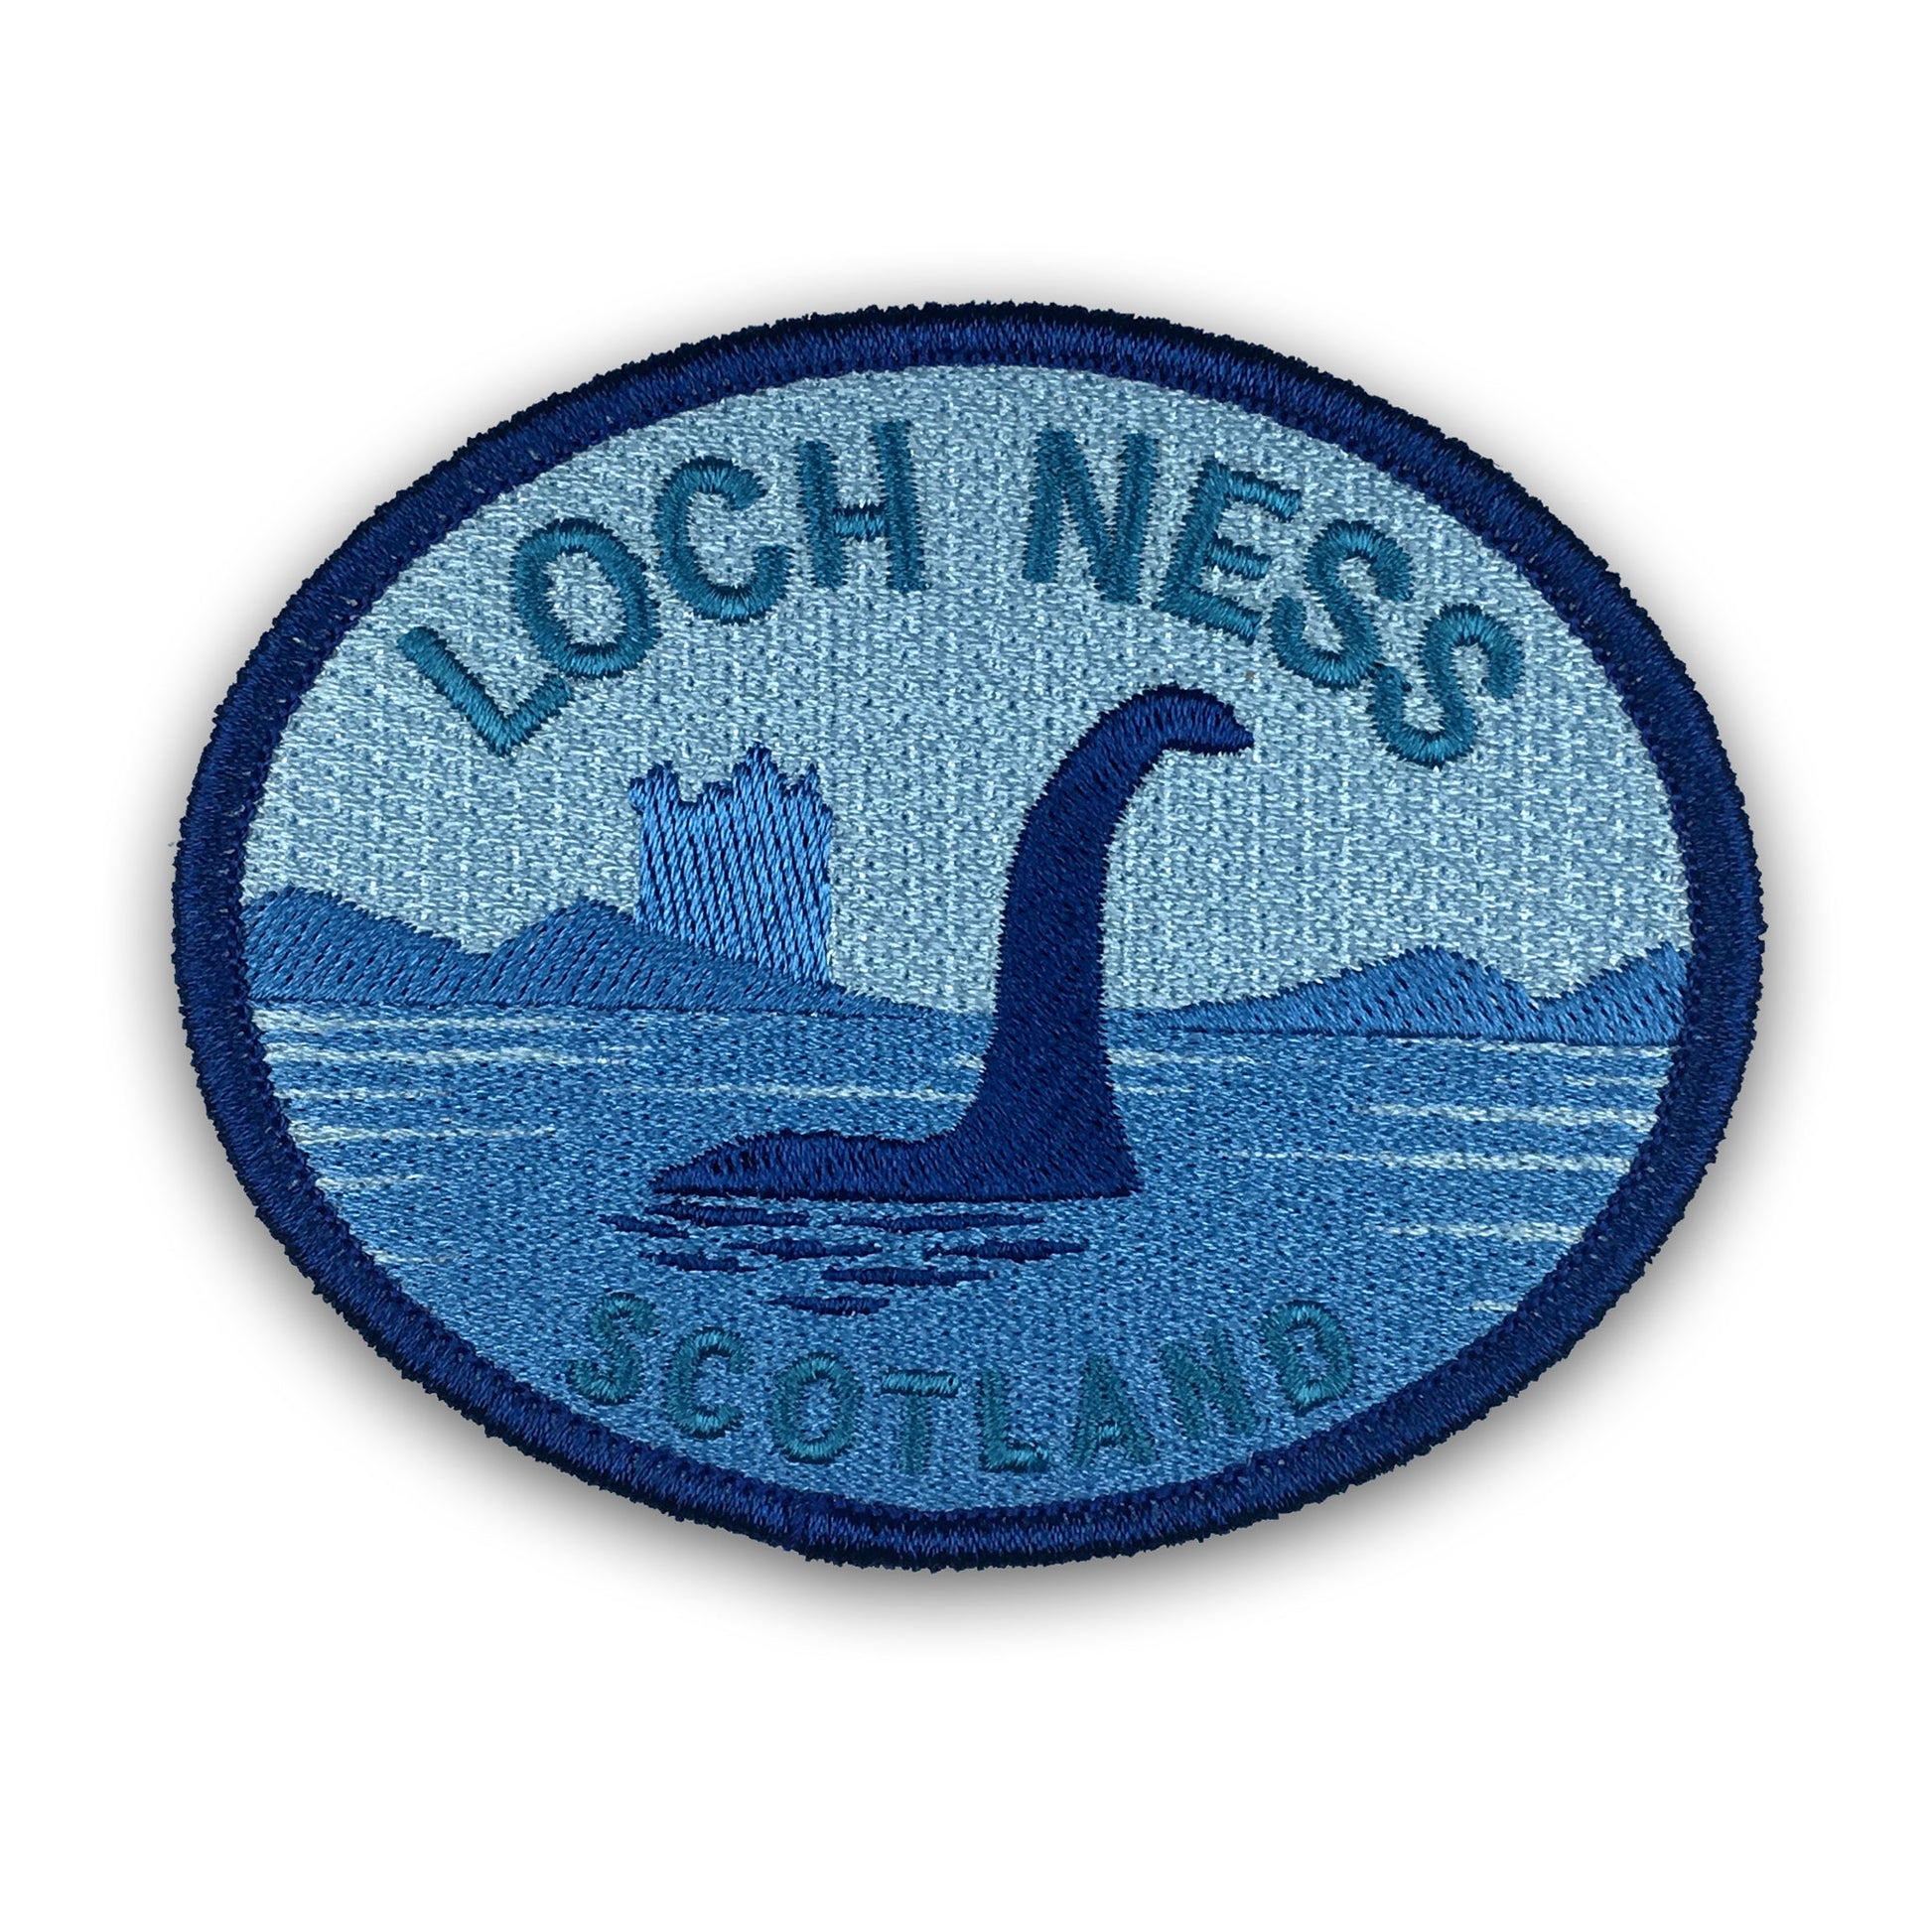 Loch Ness, Scotland (Nessie) Travel Patch by Monsterologist